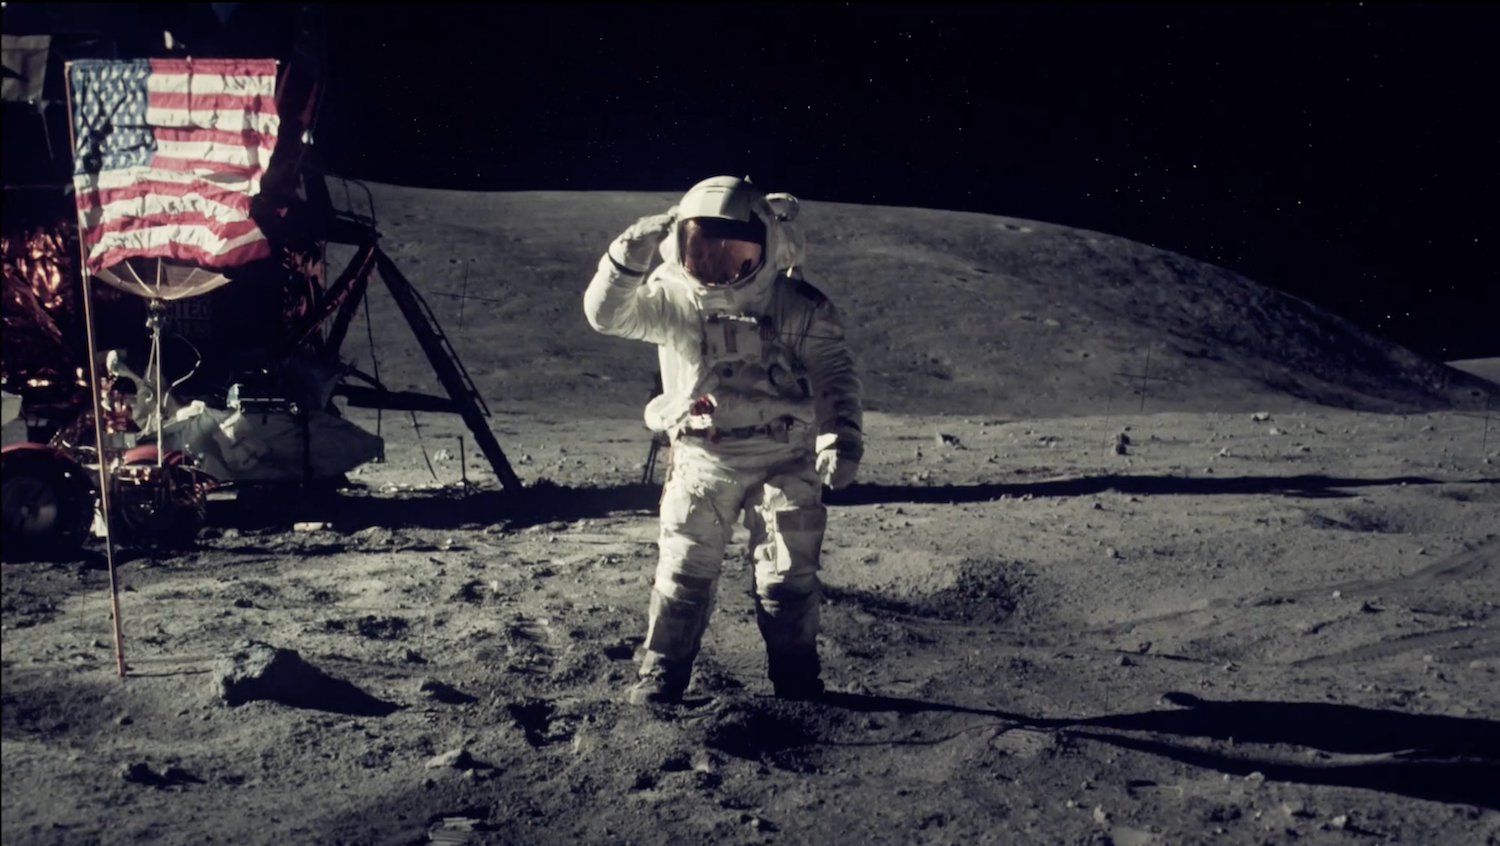 Аполлон 11 1969. Man landed on the moon